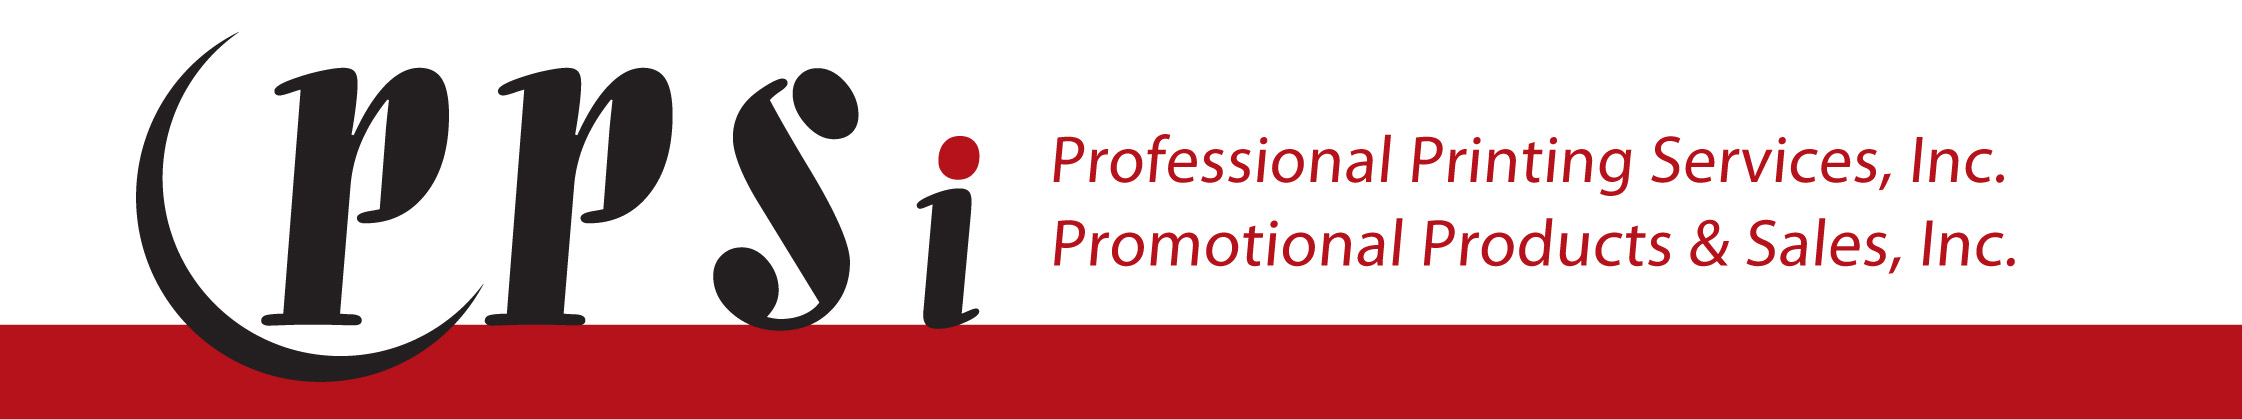 Professional Printing Services, Inc.'s Logo